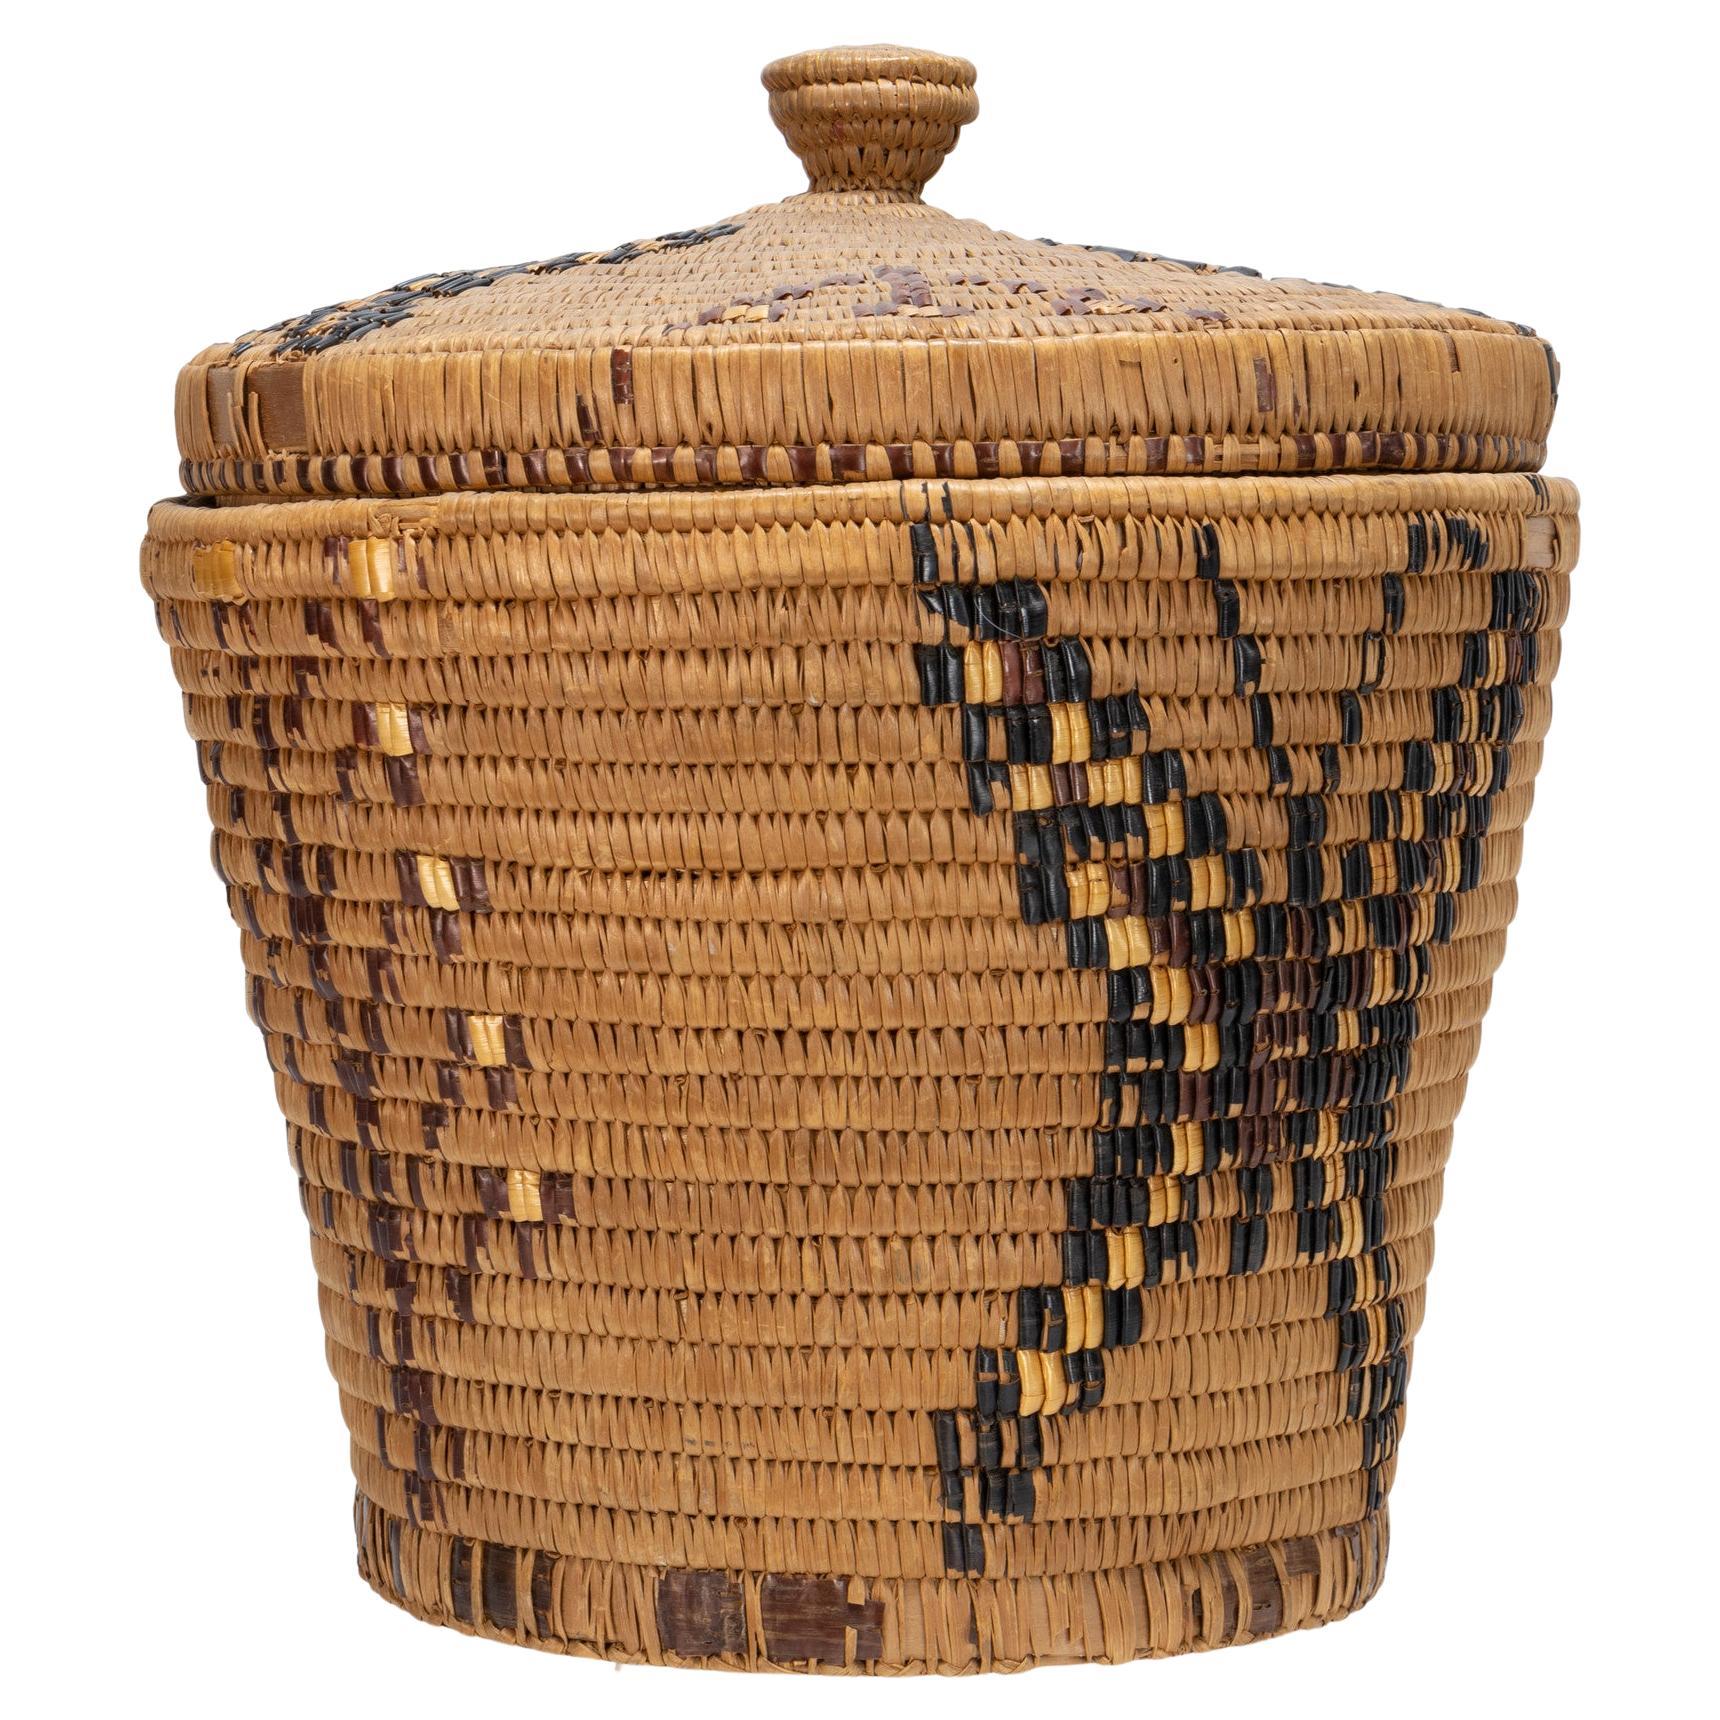 How do I identify Native American baskets?